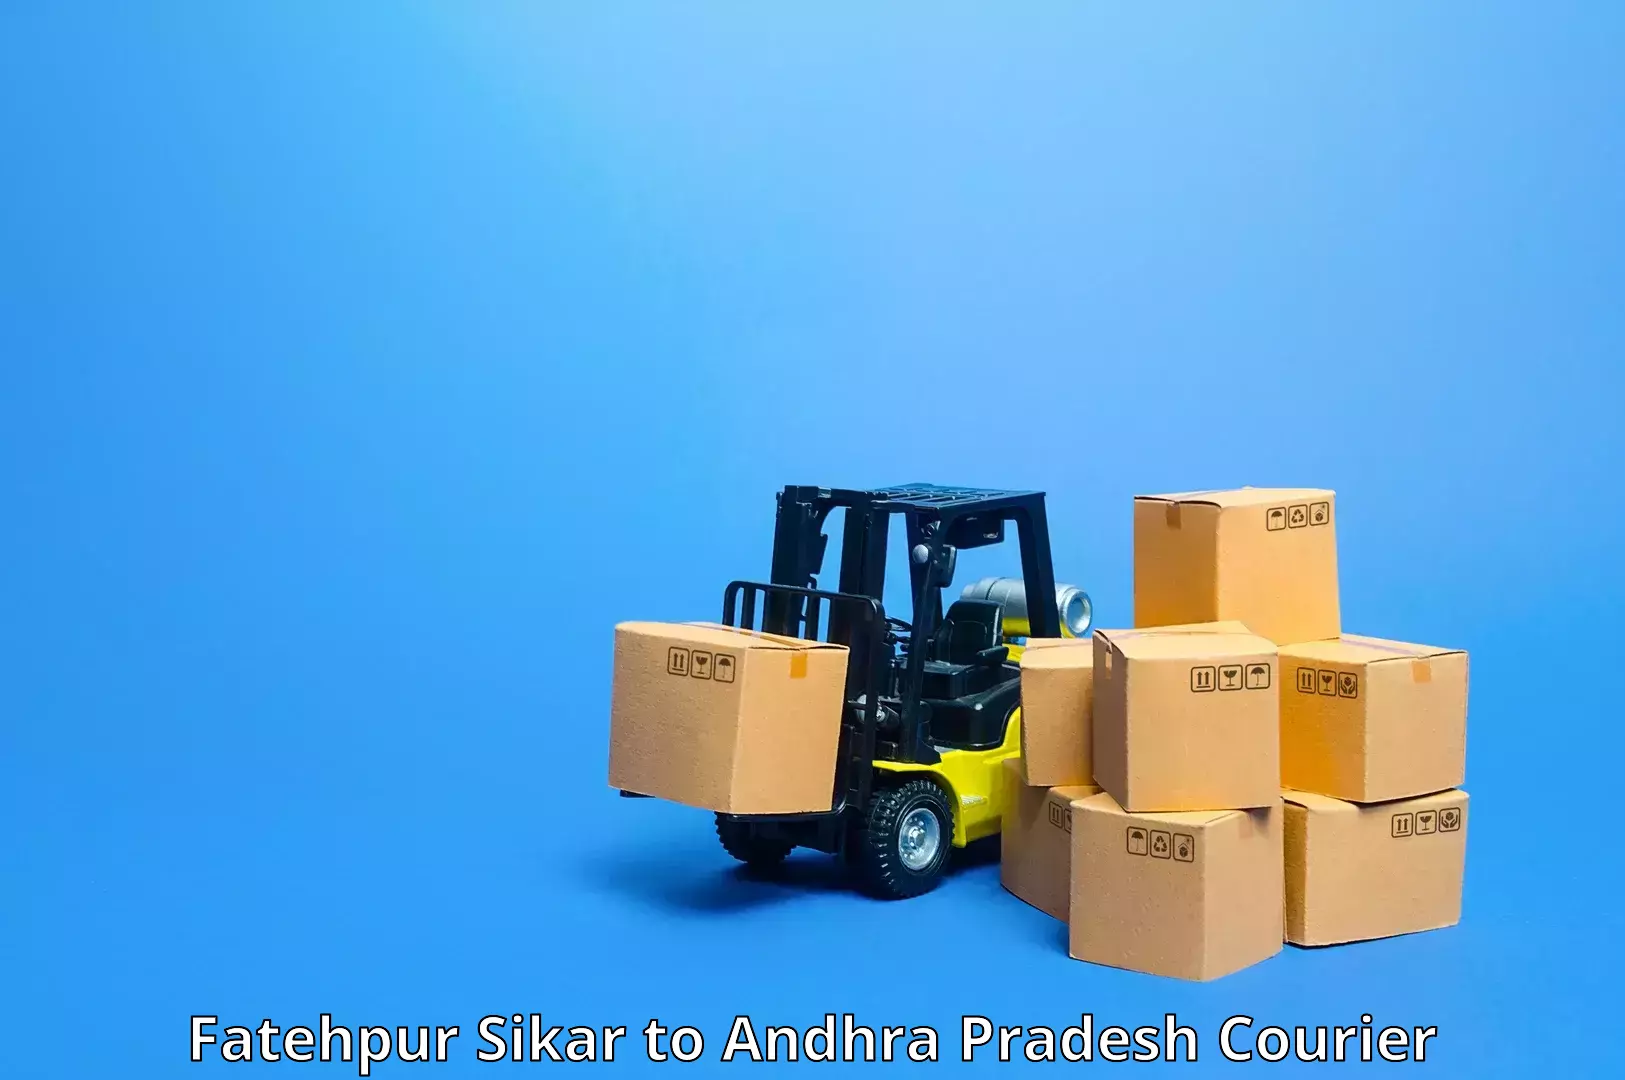 Regular parcel service Fatehpur Sikar to Visakhapatnam Port